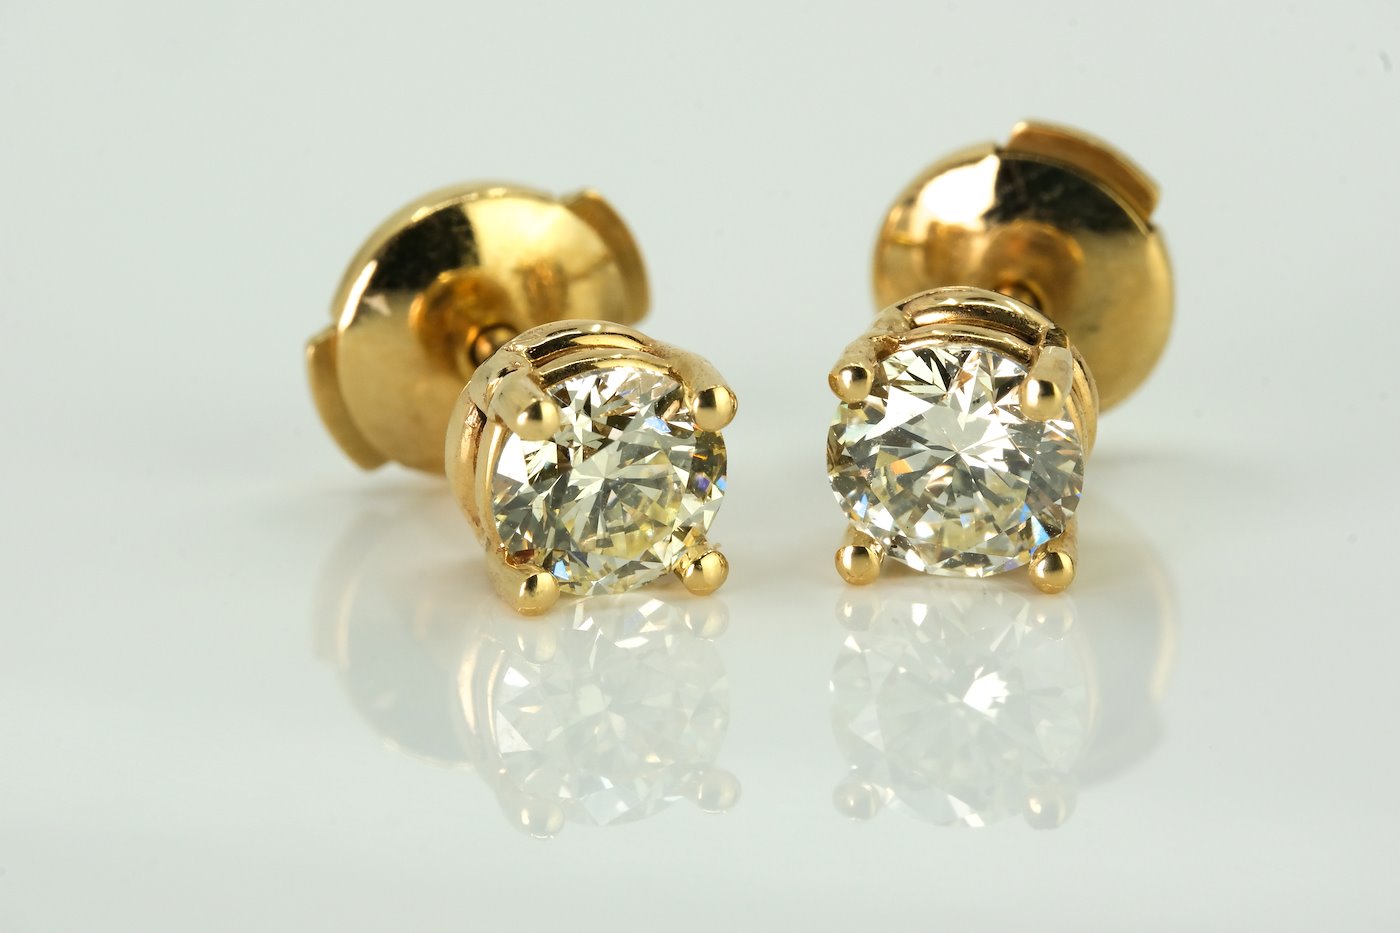 Anton Schwartz - Bodové naušnice osazené diamanty 2x 0,40 ct, zlato 585/1000, hrubá hmotnost 1,36 g